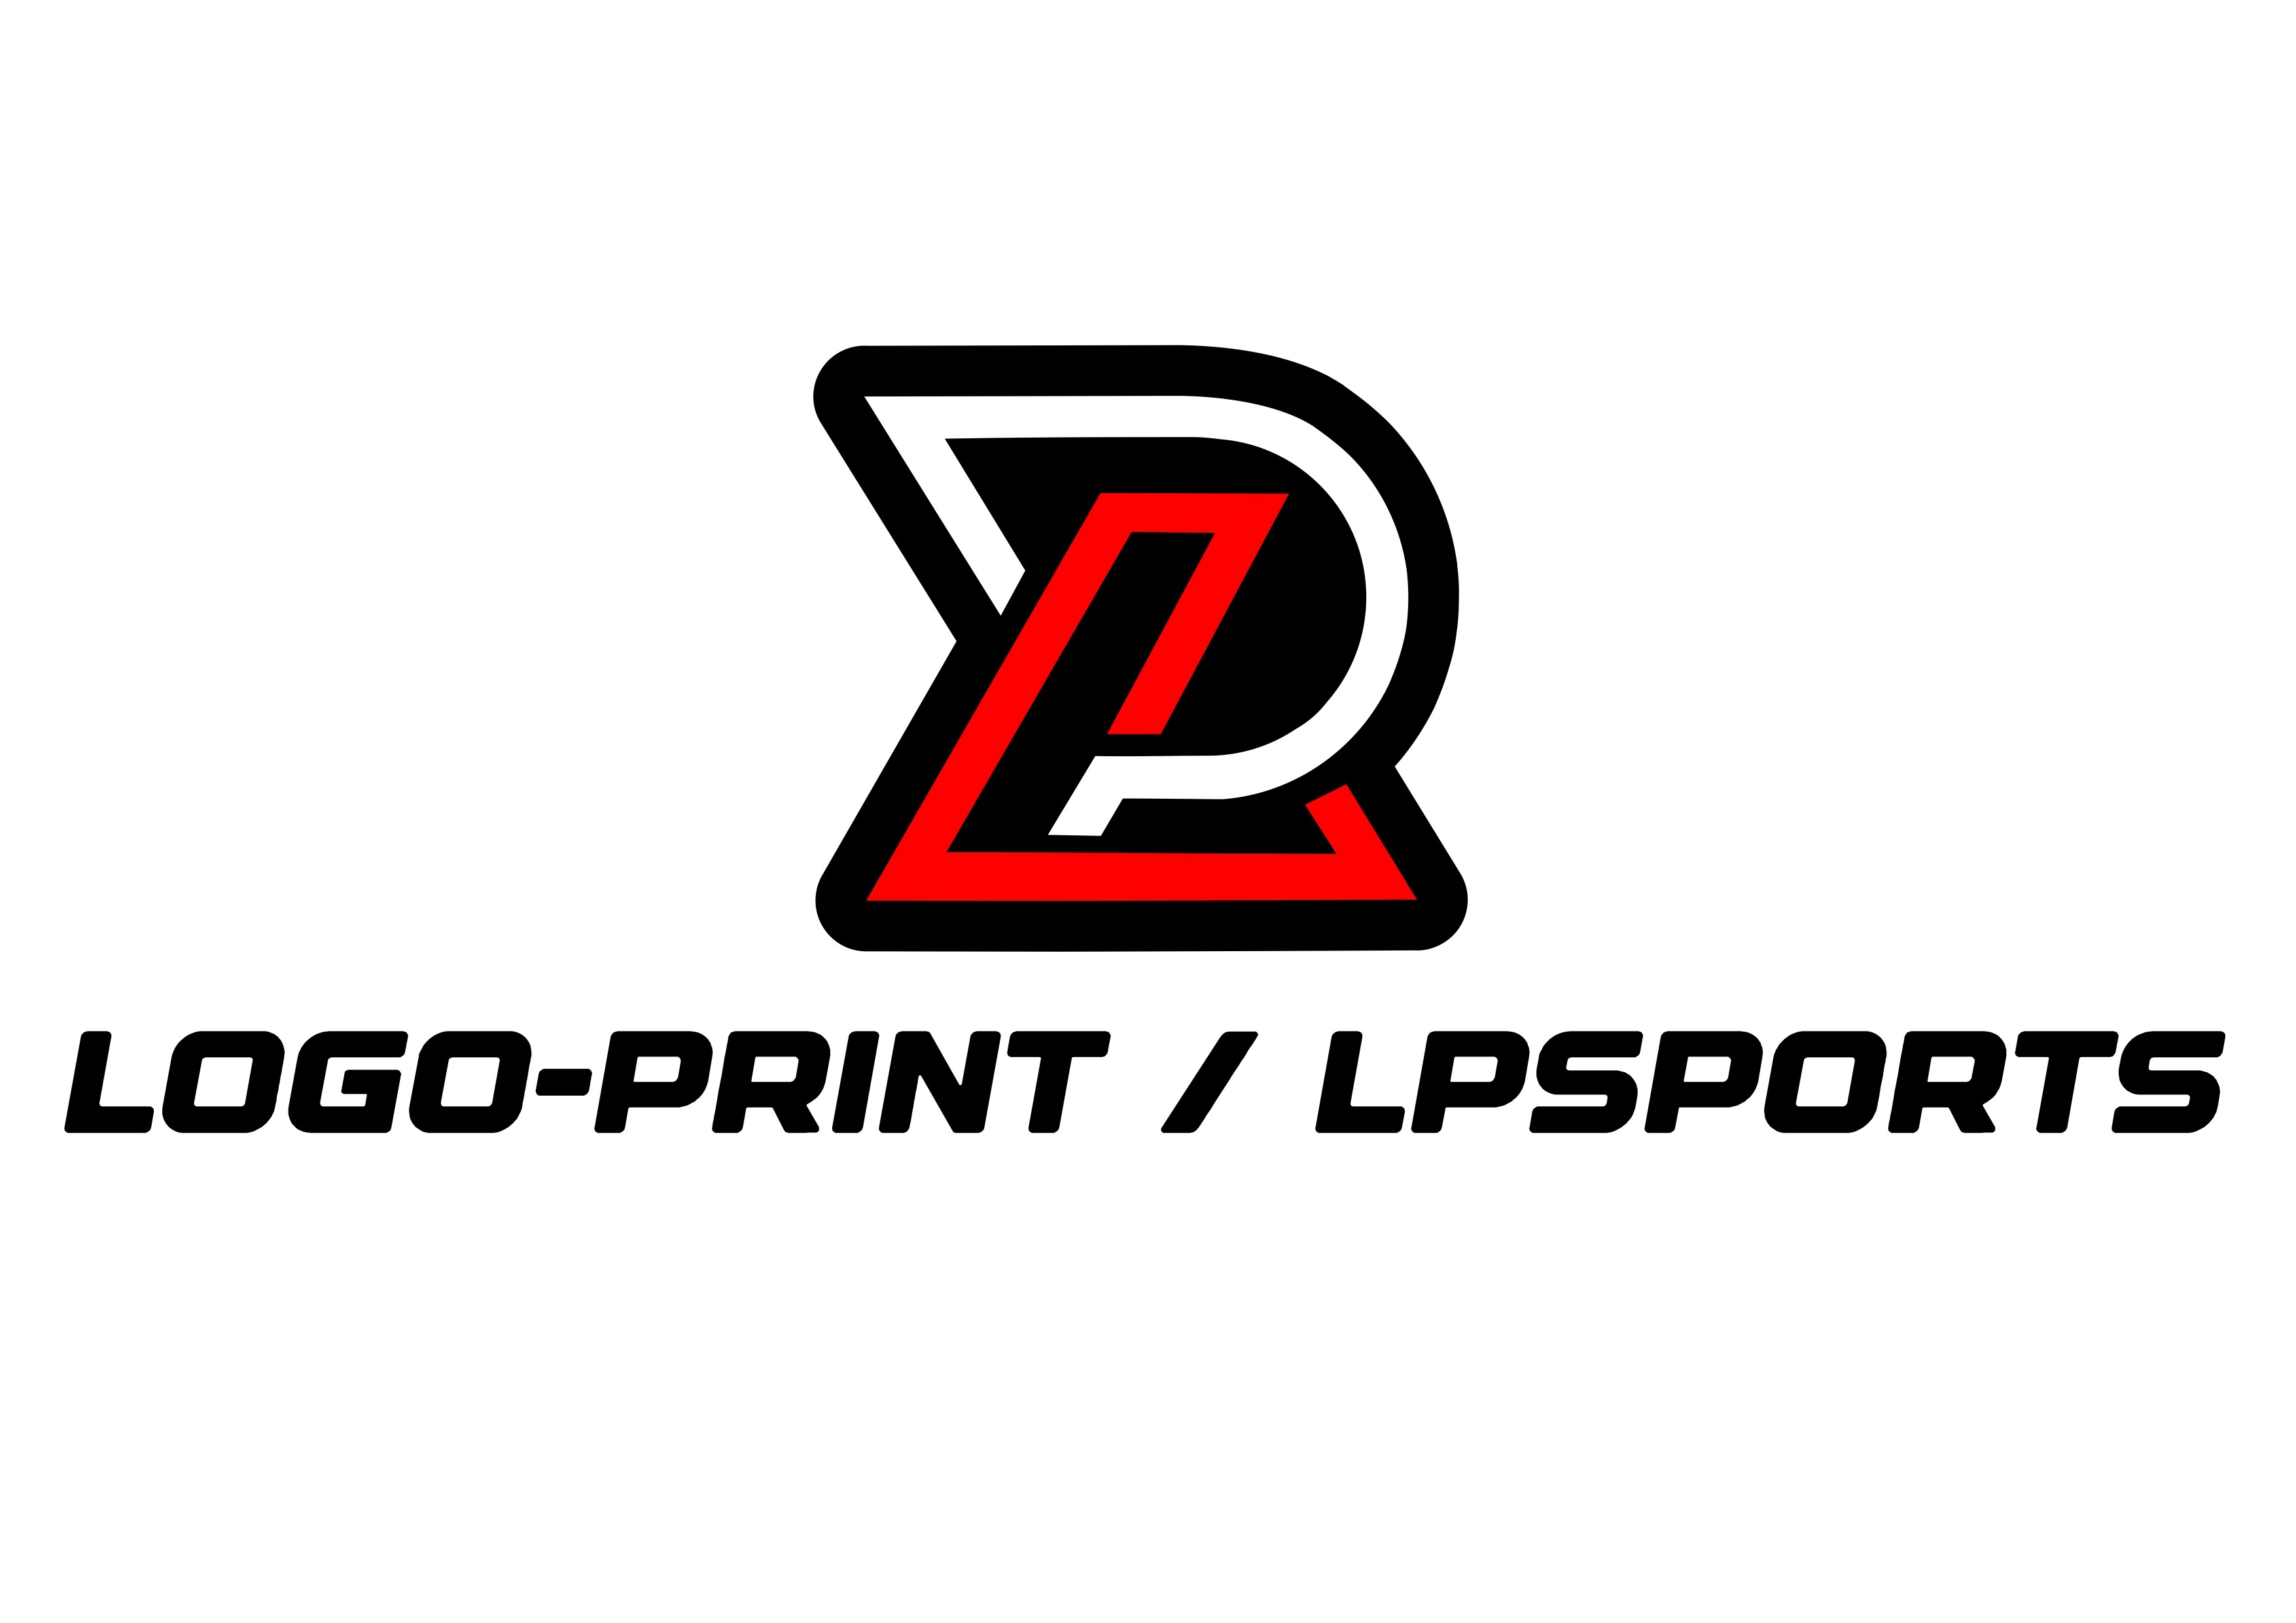 https://www.jurace.ch/images/upload/1713798473-lp sport logo-print.jpg